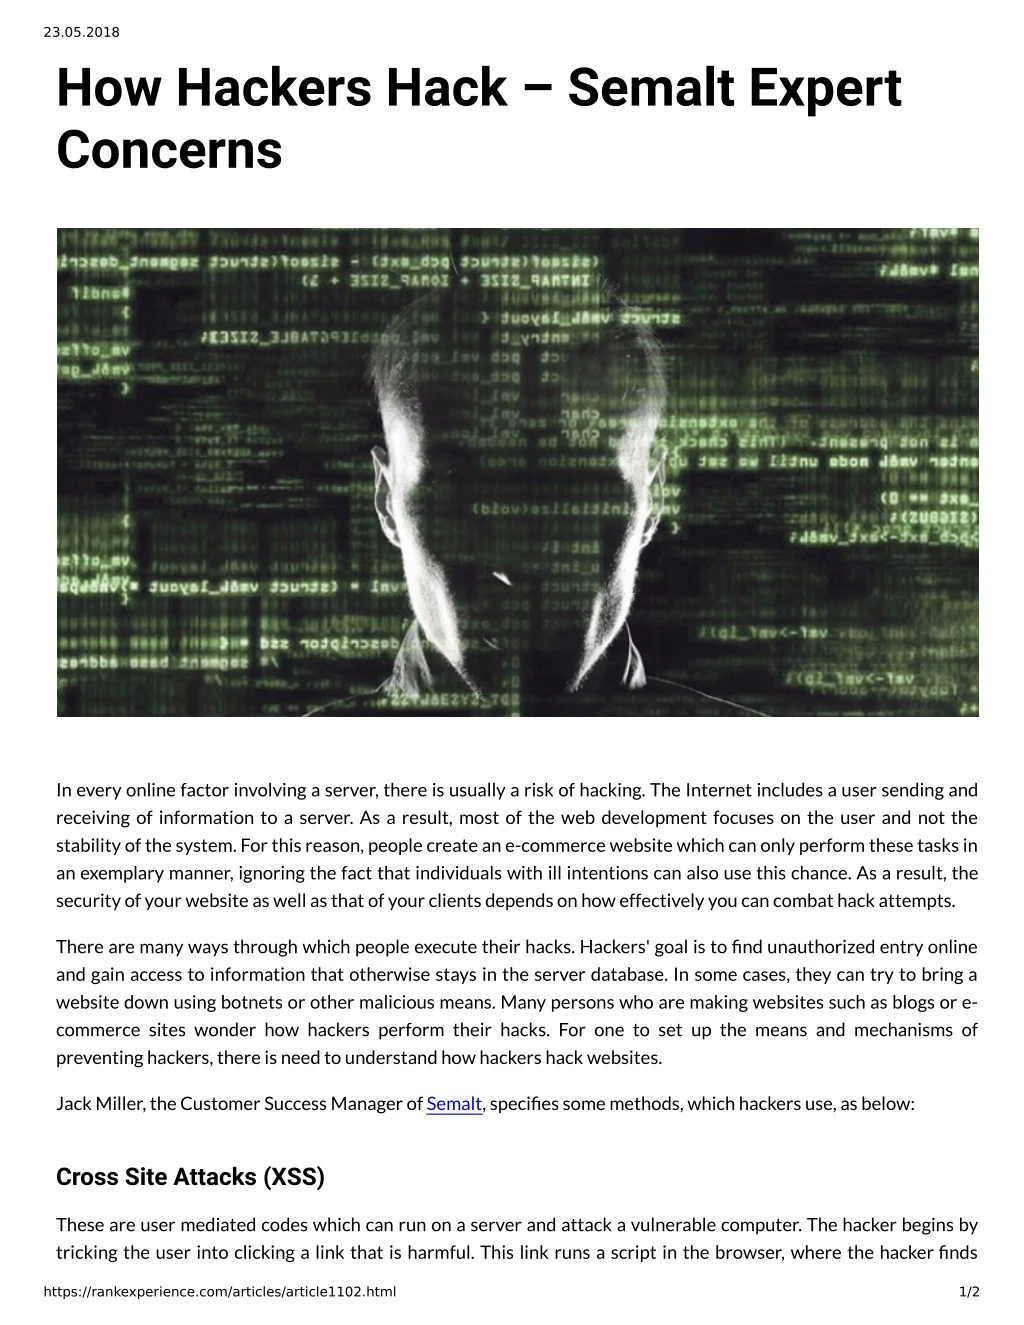 23 05 2018 how hackers hack semalt expert concerns